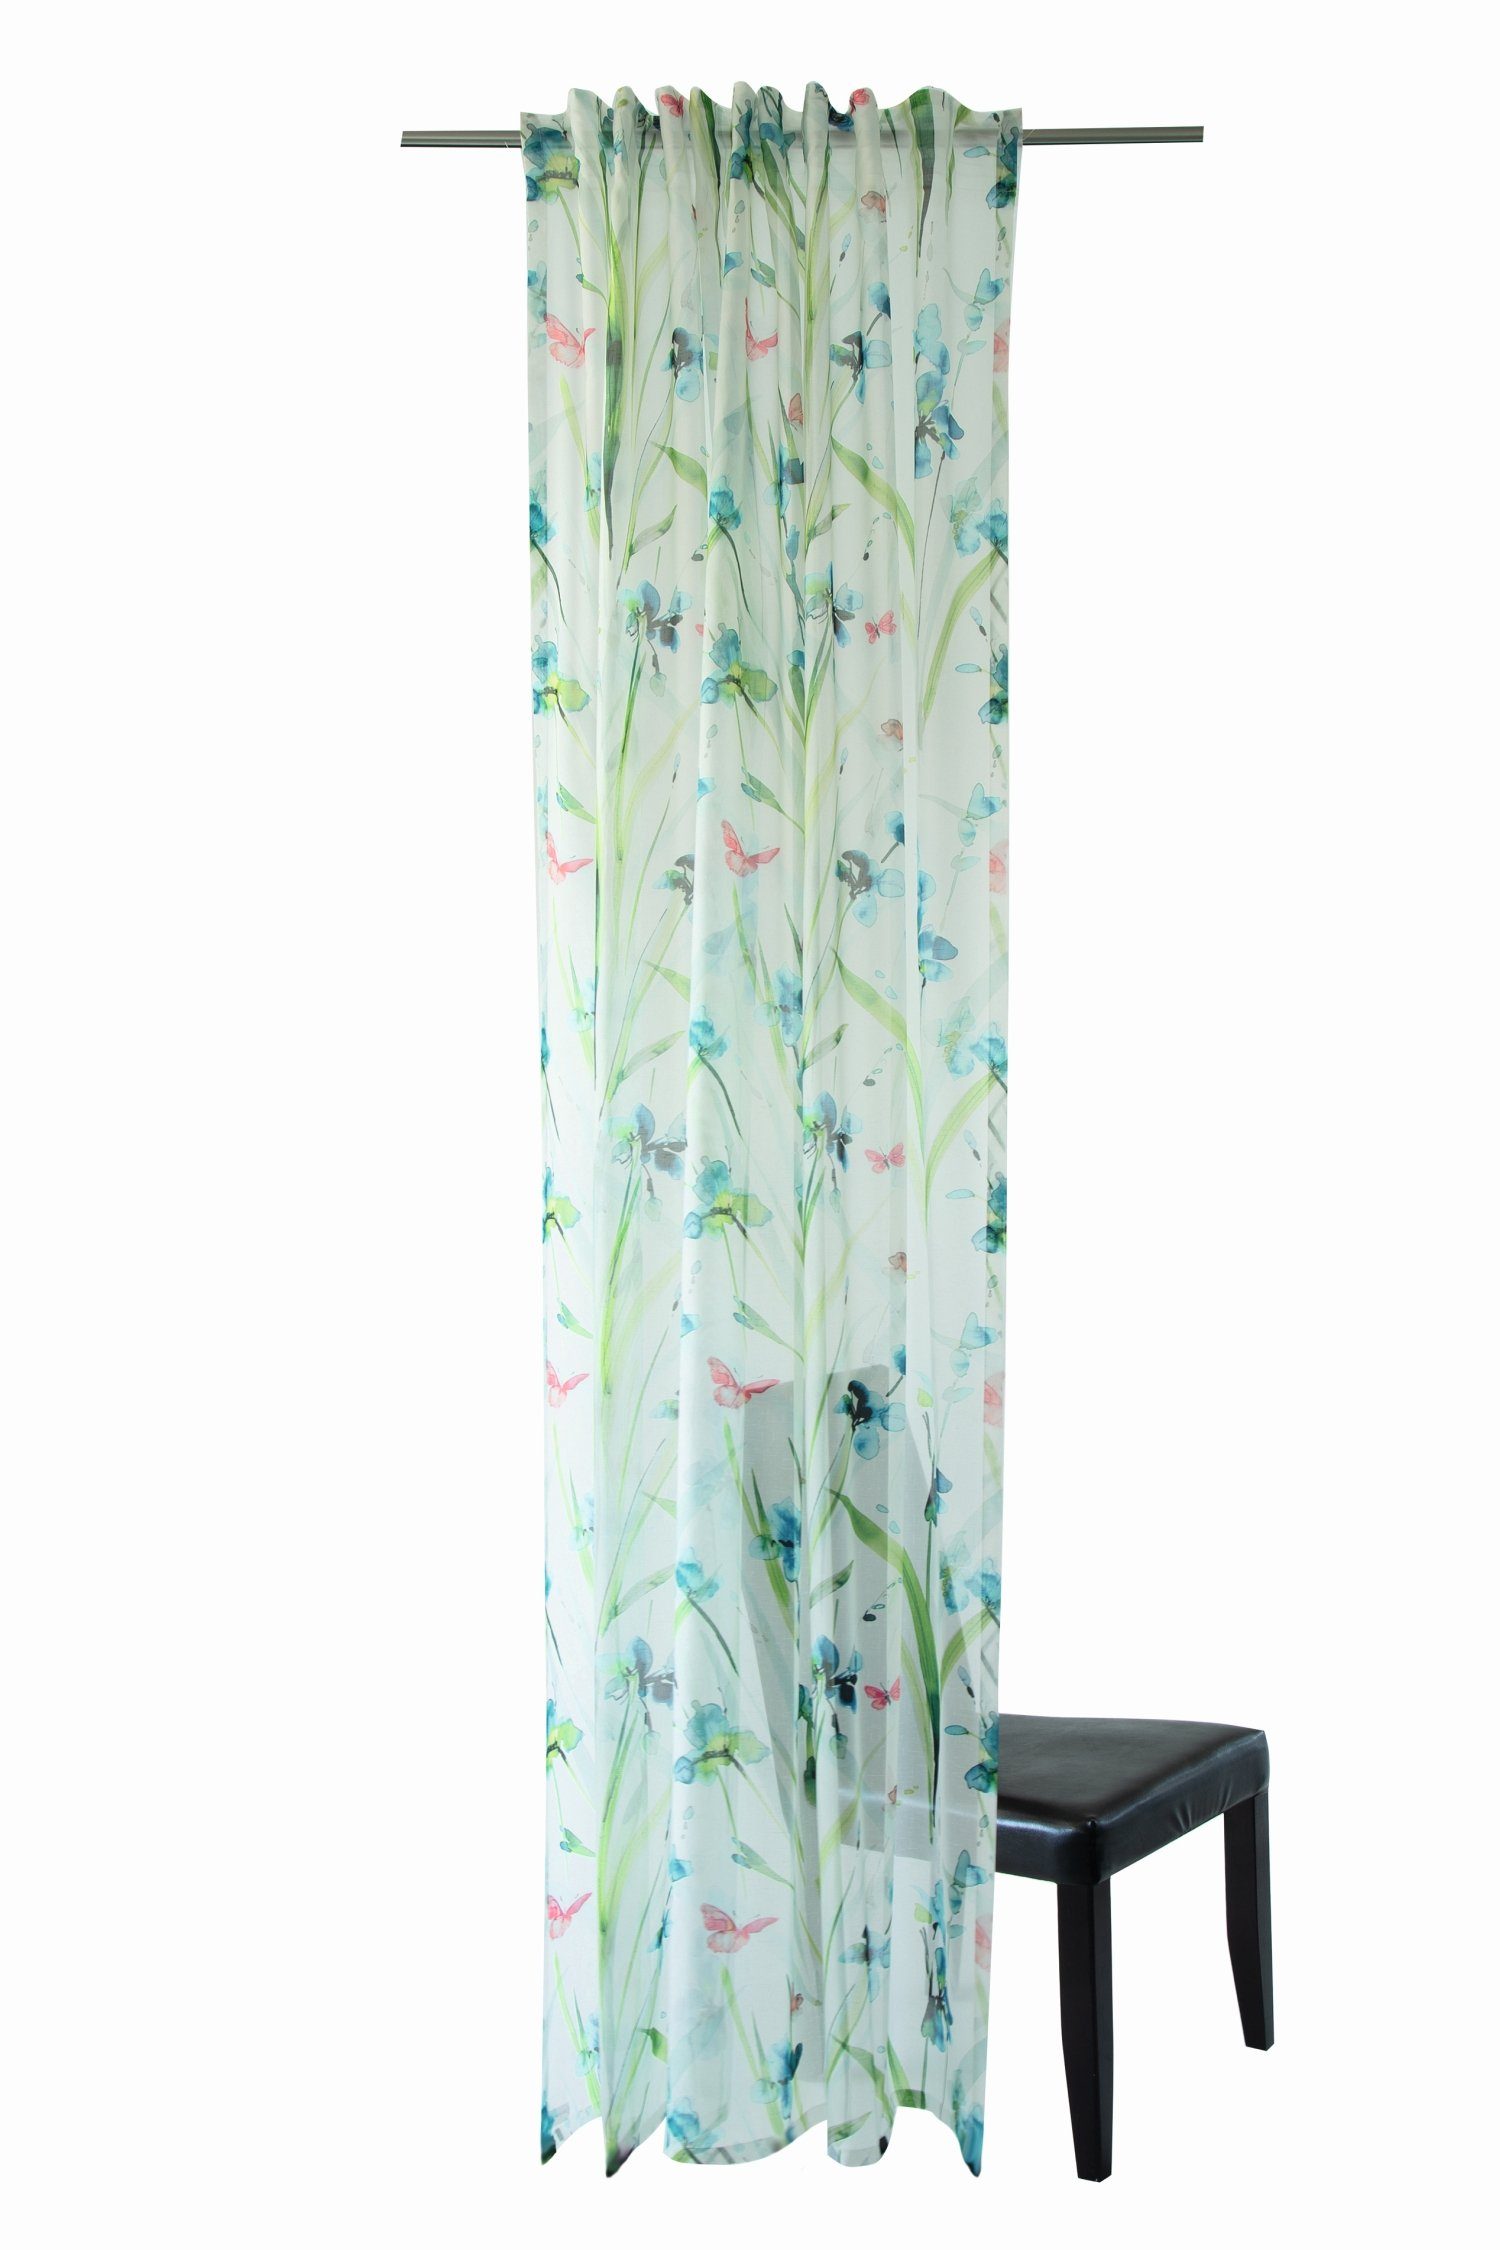 Vorhang, HOMING, Lichtschutz, Homing Schlaufenschal 140x245 Skratta Vorhang transparent multicolor